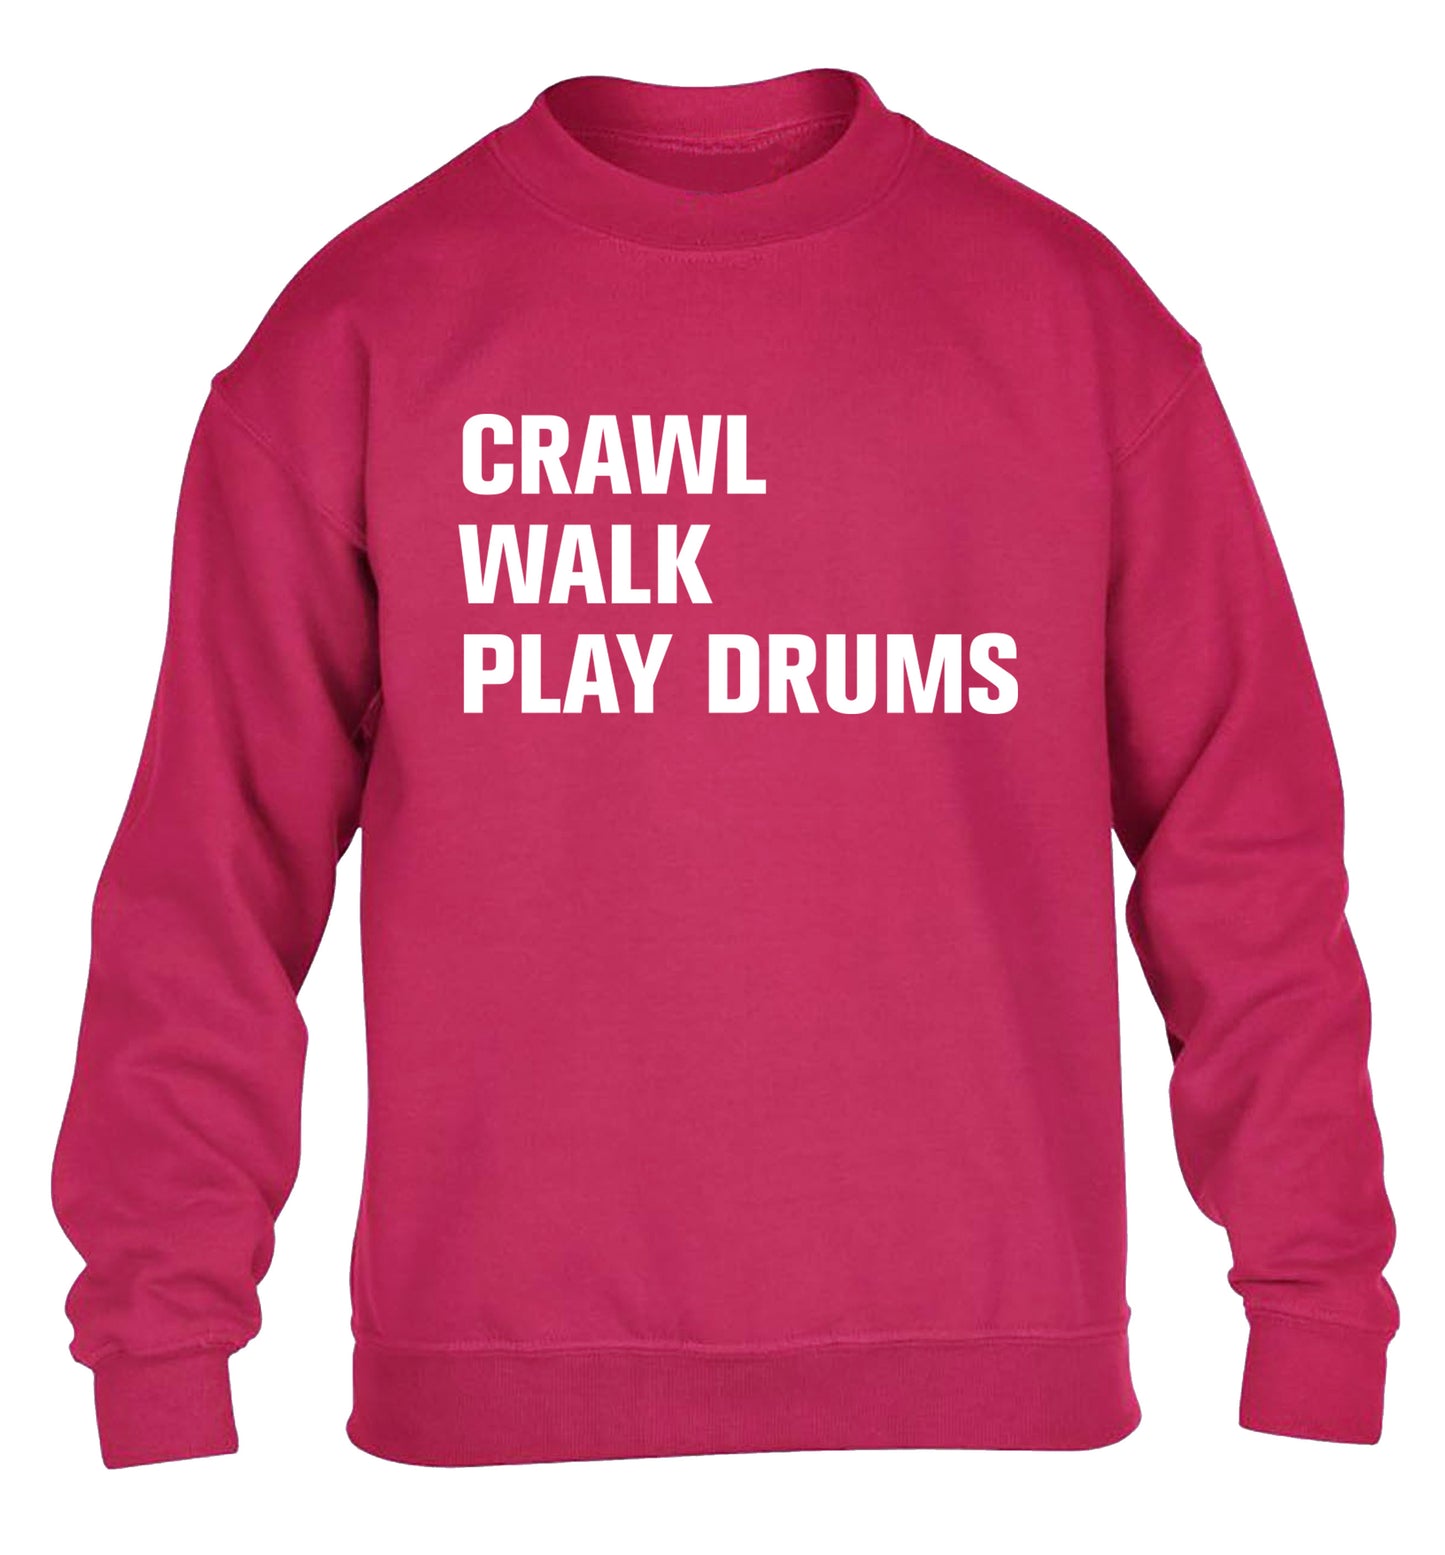 Crawl walk play drums children's pink sweater 12-13 Years